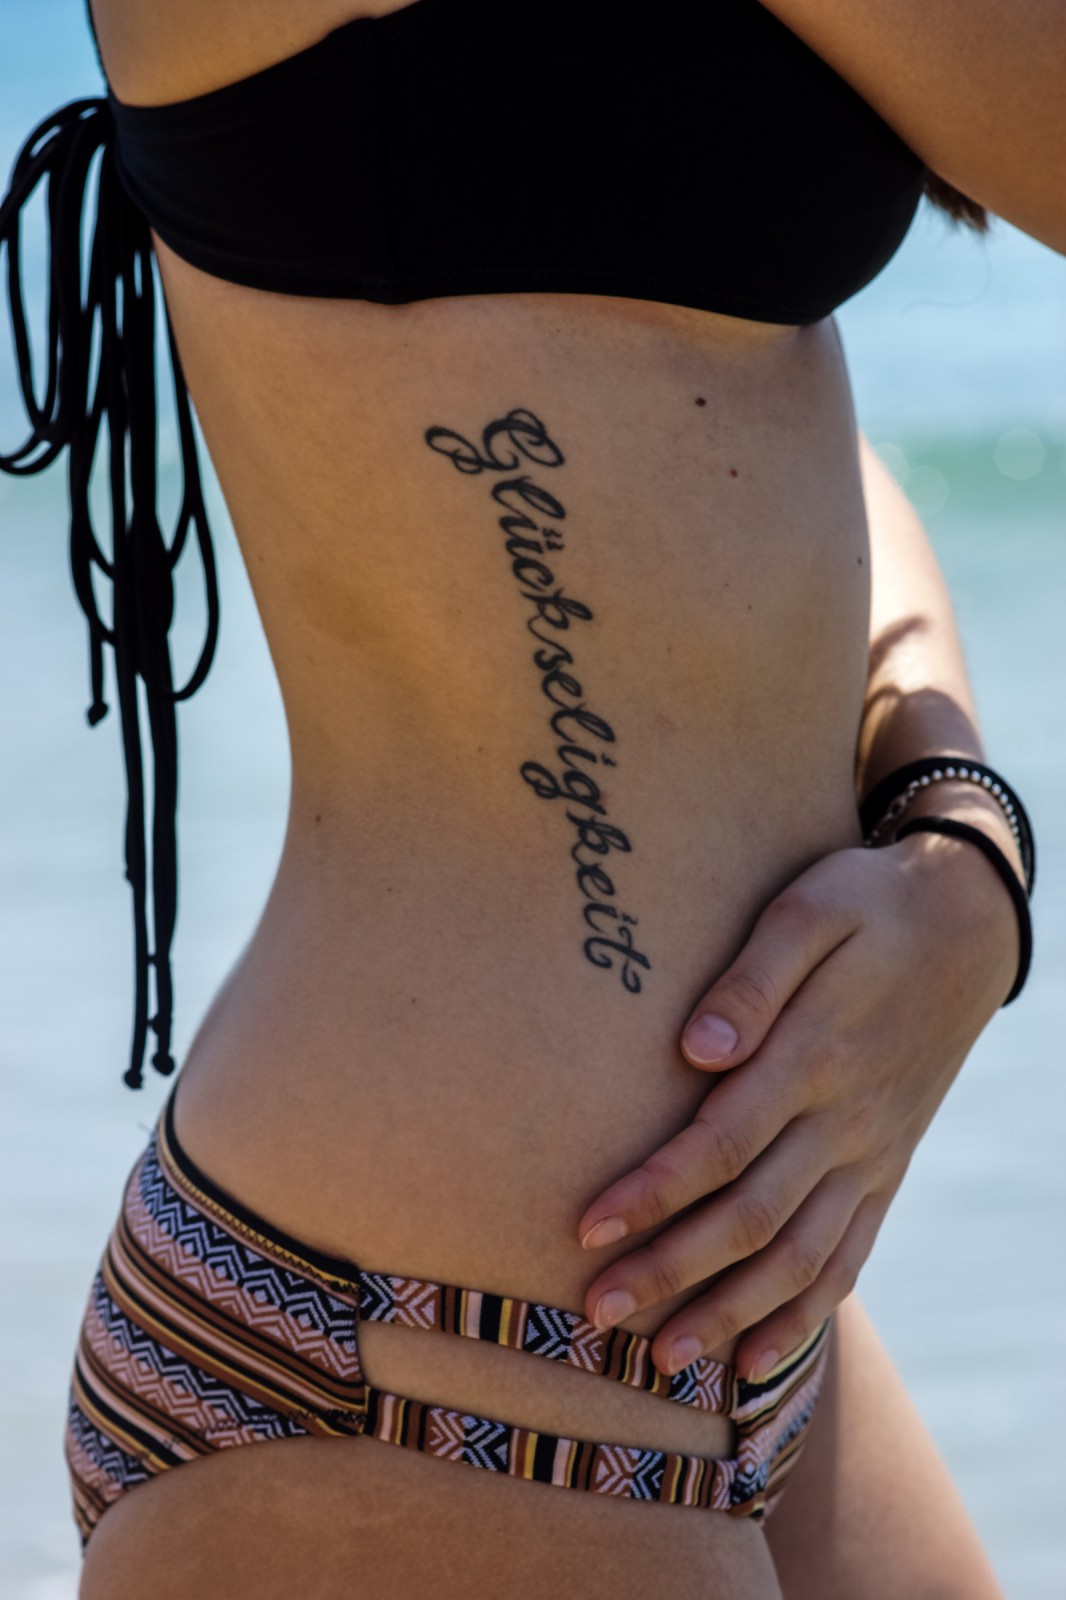 Inked Girl on the beach